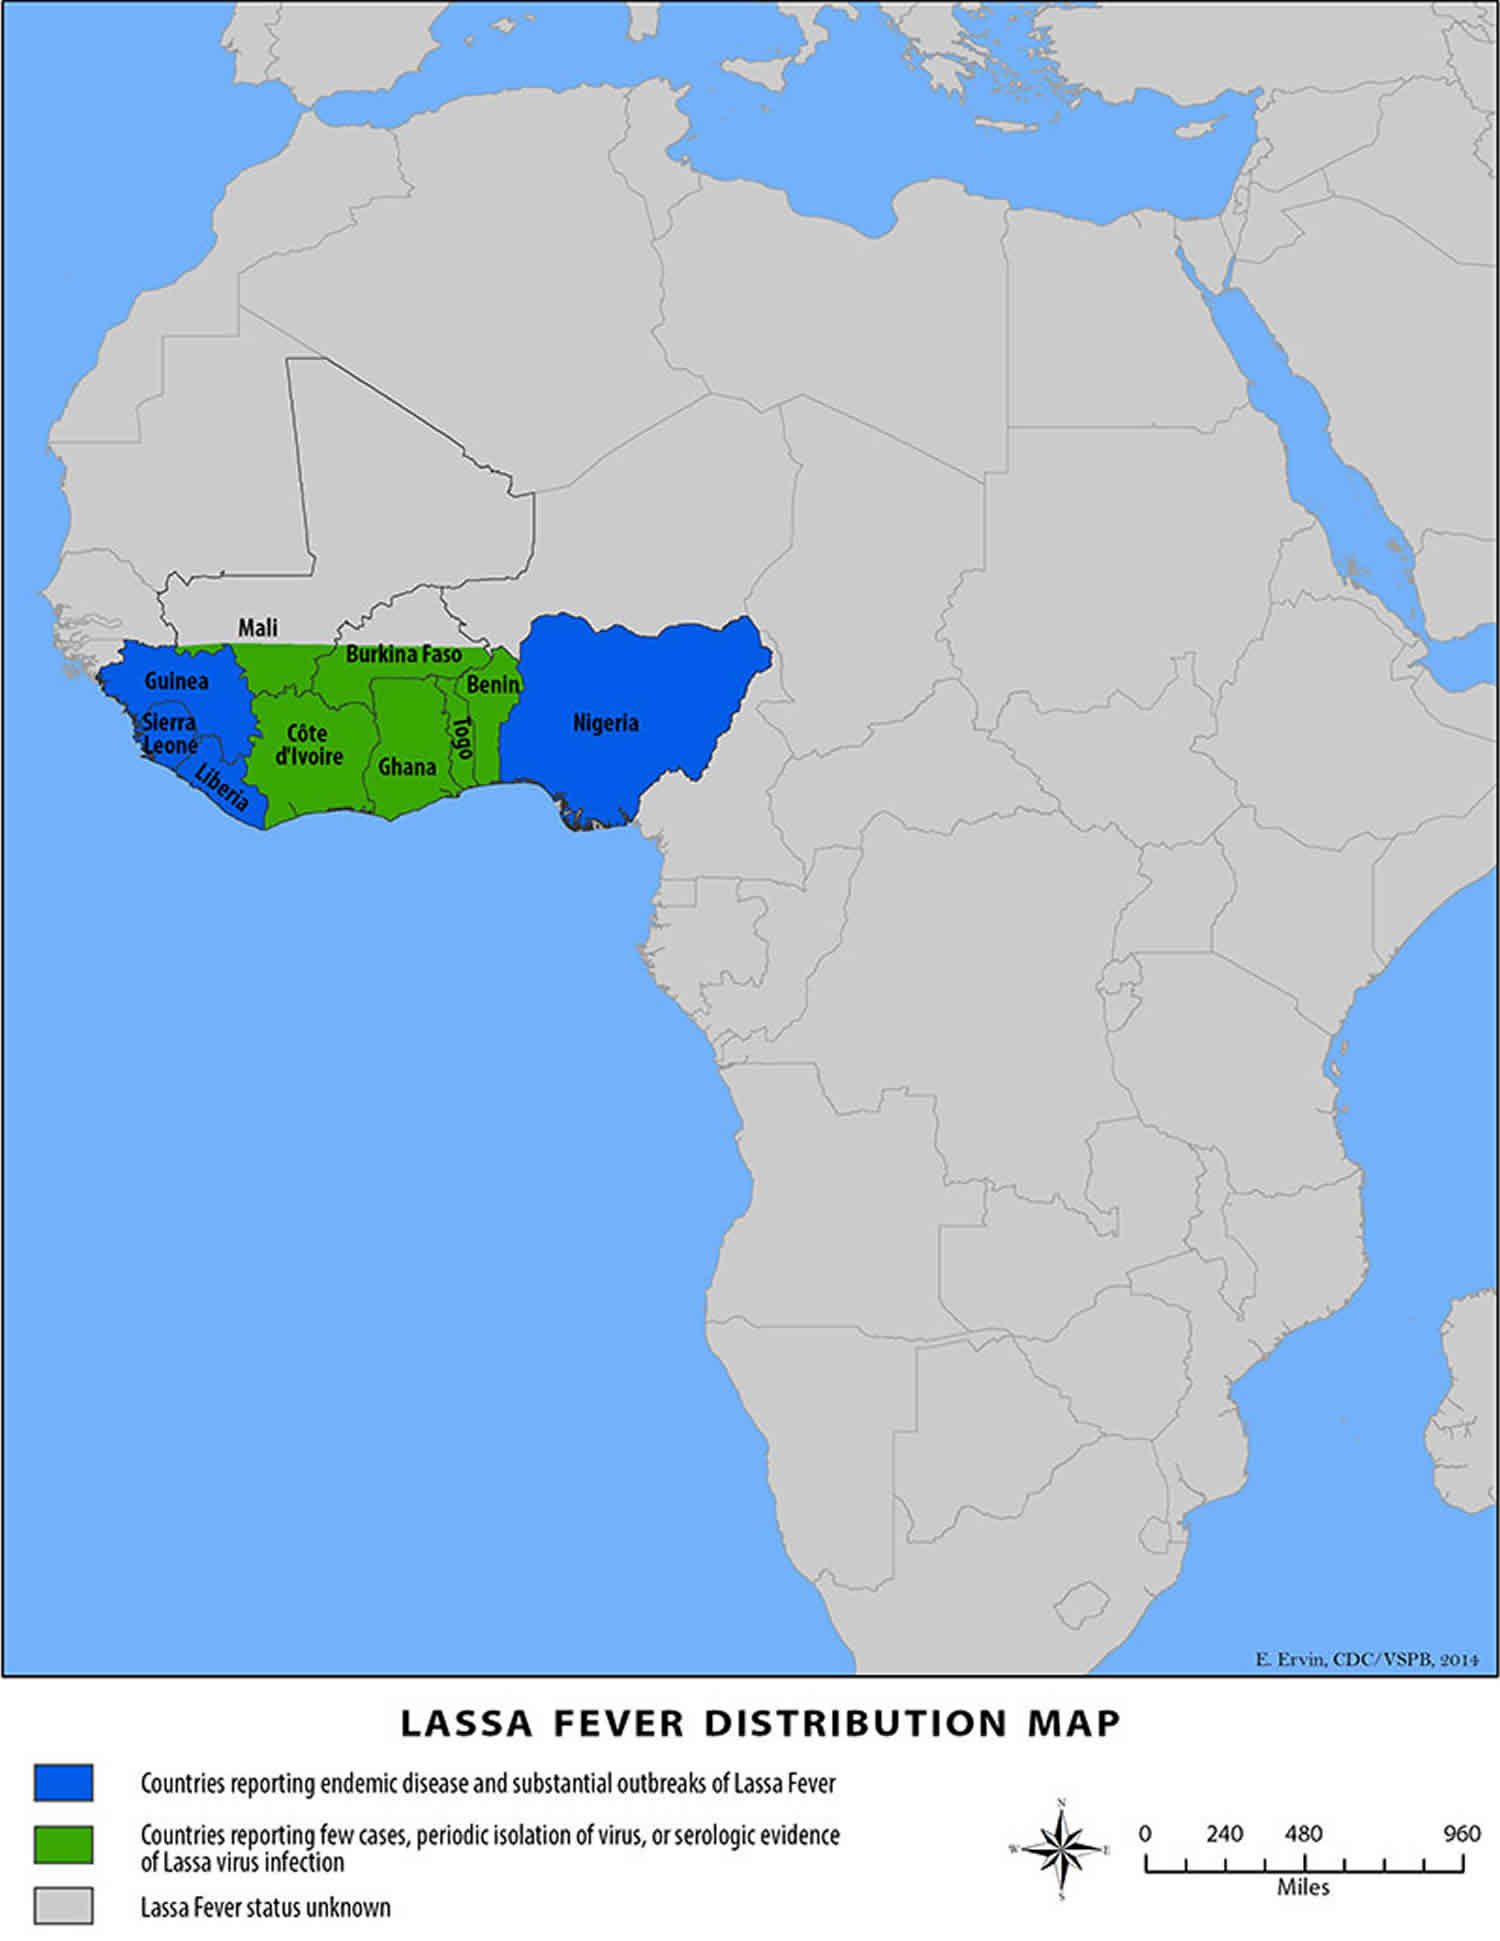 Lassa fever outbreak distribution map